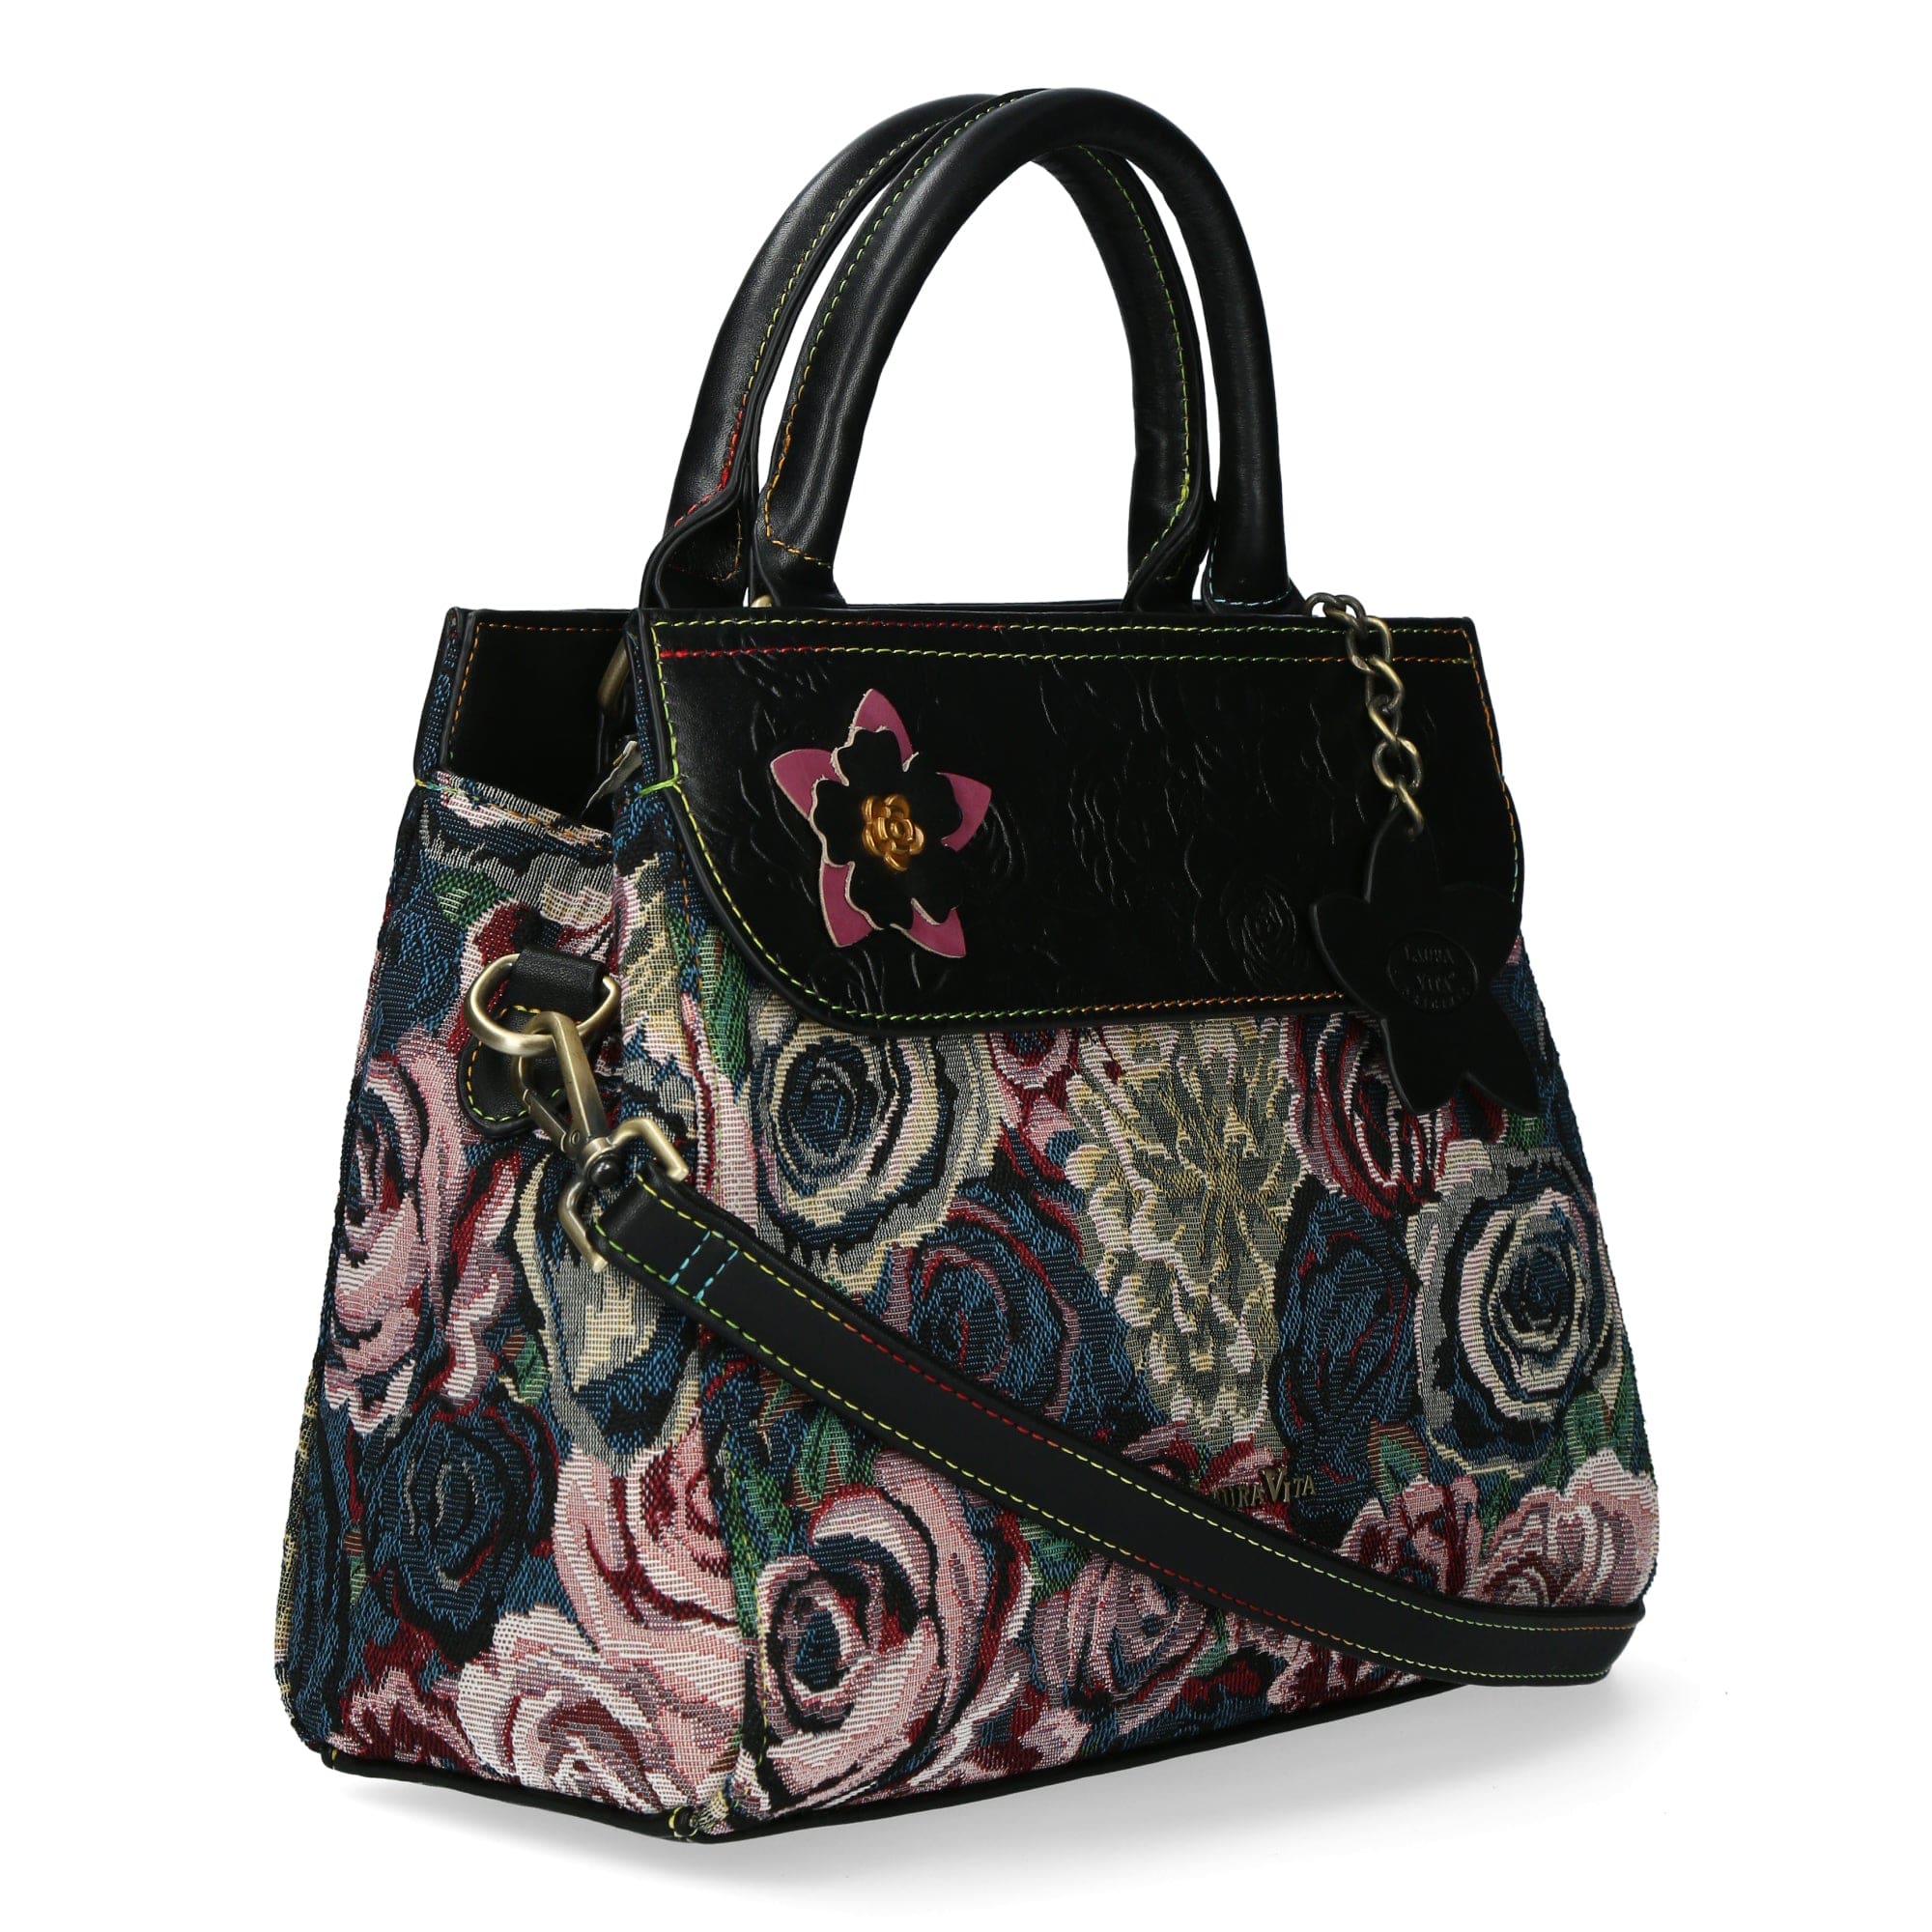 Leather Handbag 4380E - Bag